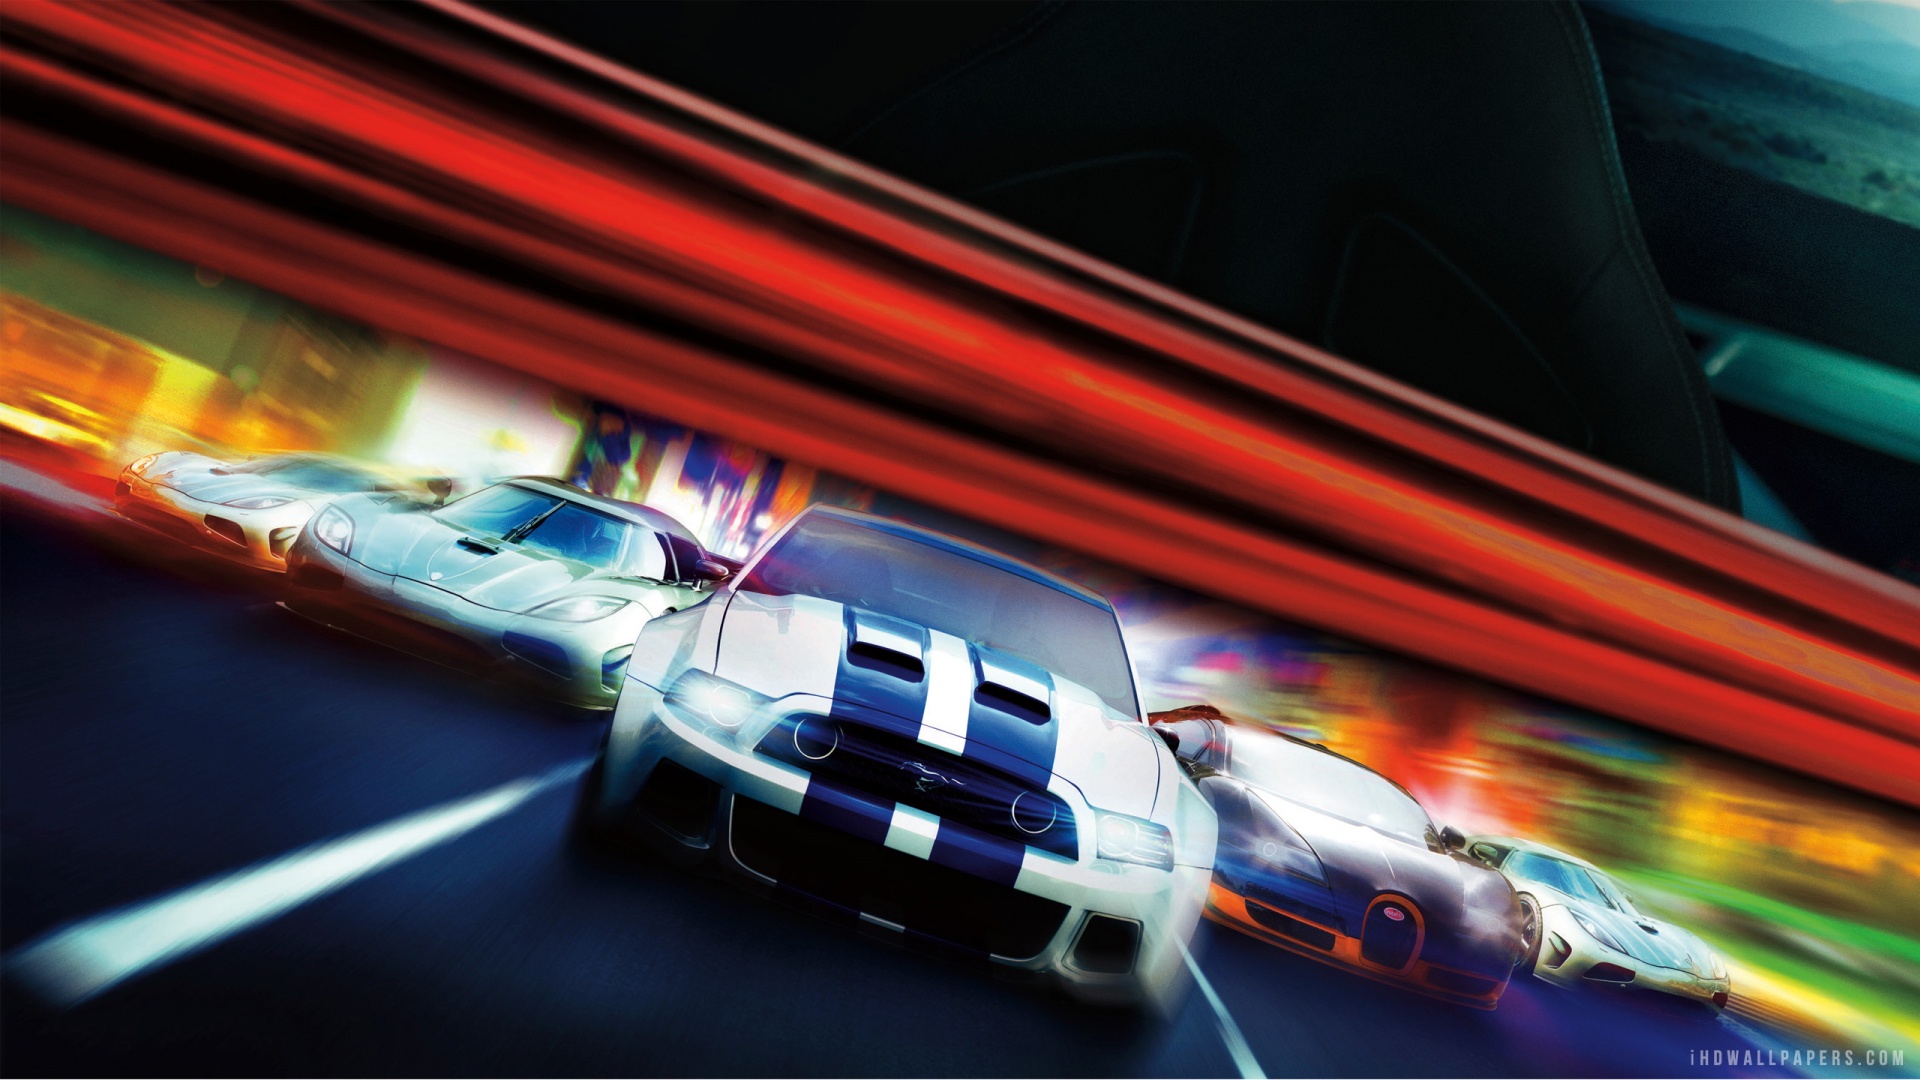 Скачать обои Need For Speed: Жажда Скорости на телефон бесплатно